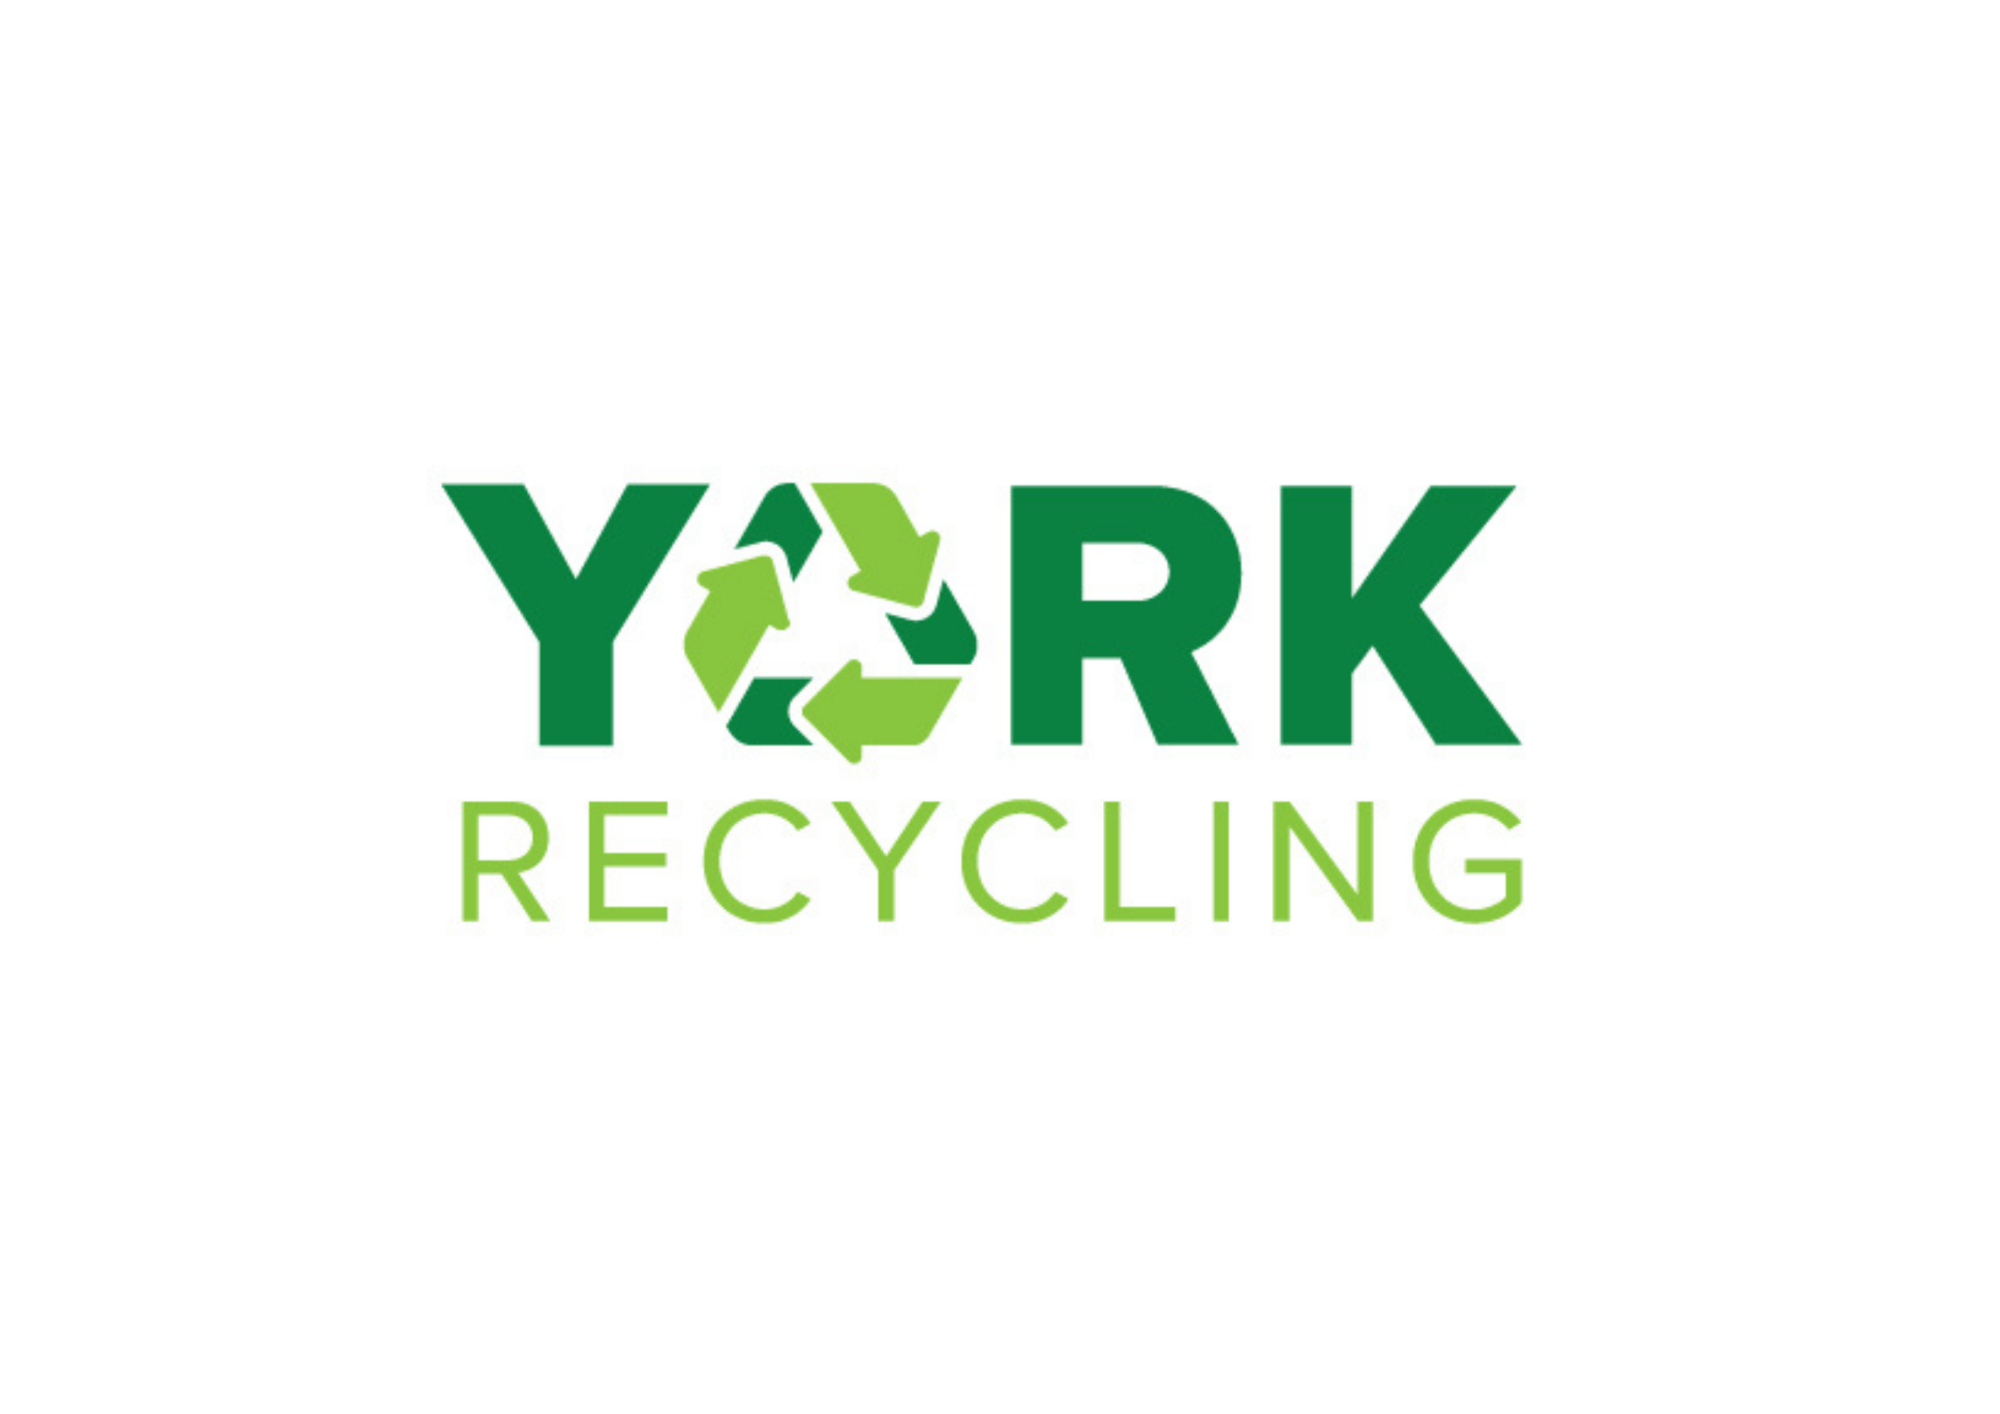 York Recycling